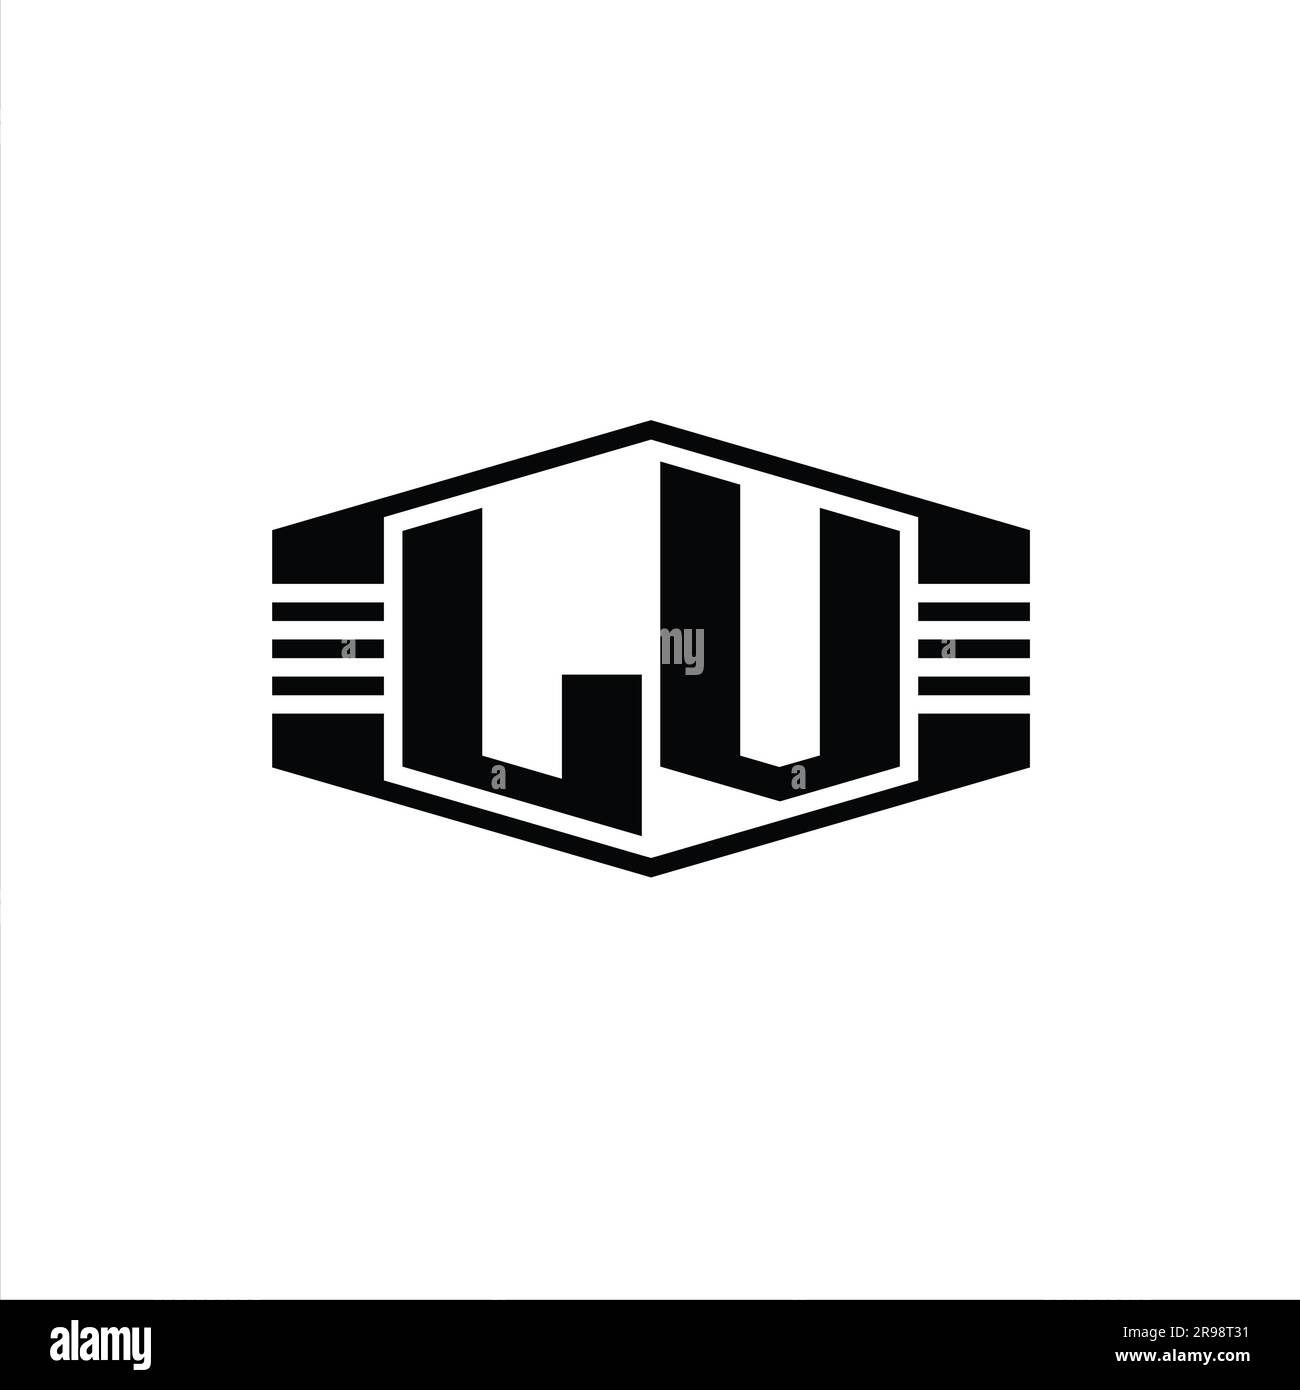 Lv logo monogram with emblem shield style design Vector Image